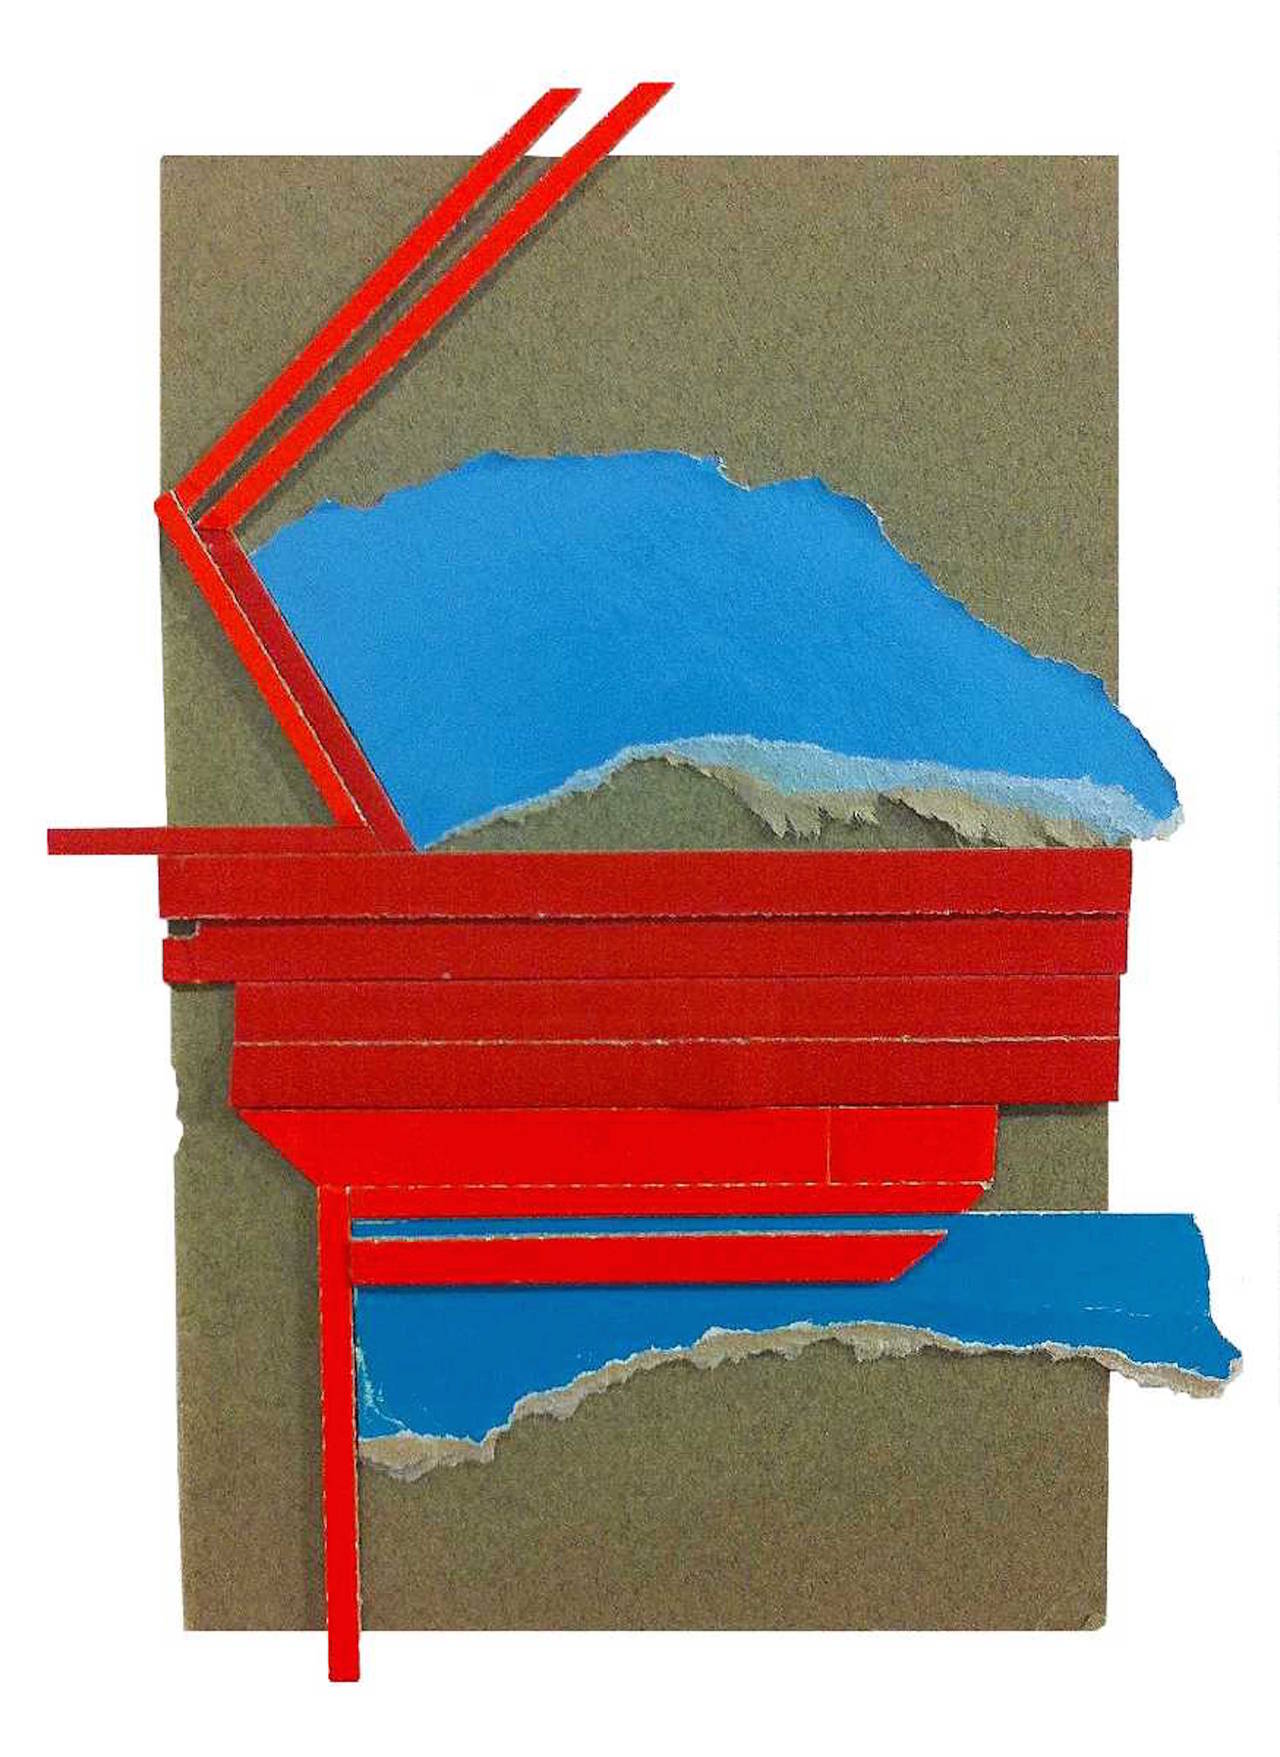 Ryan Sarah Murphy, 'Platform', 2014, Found Objects, Cardboard, Laid Paper 